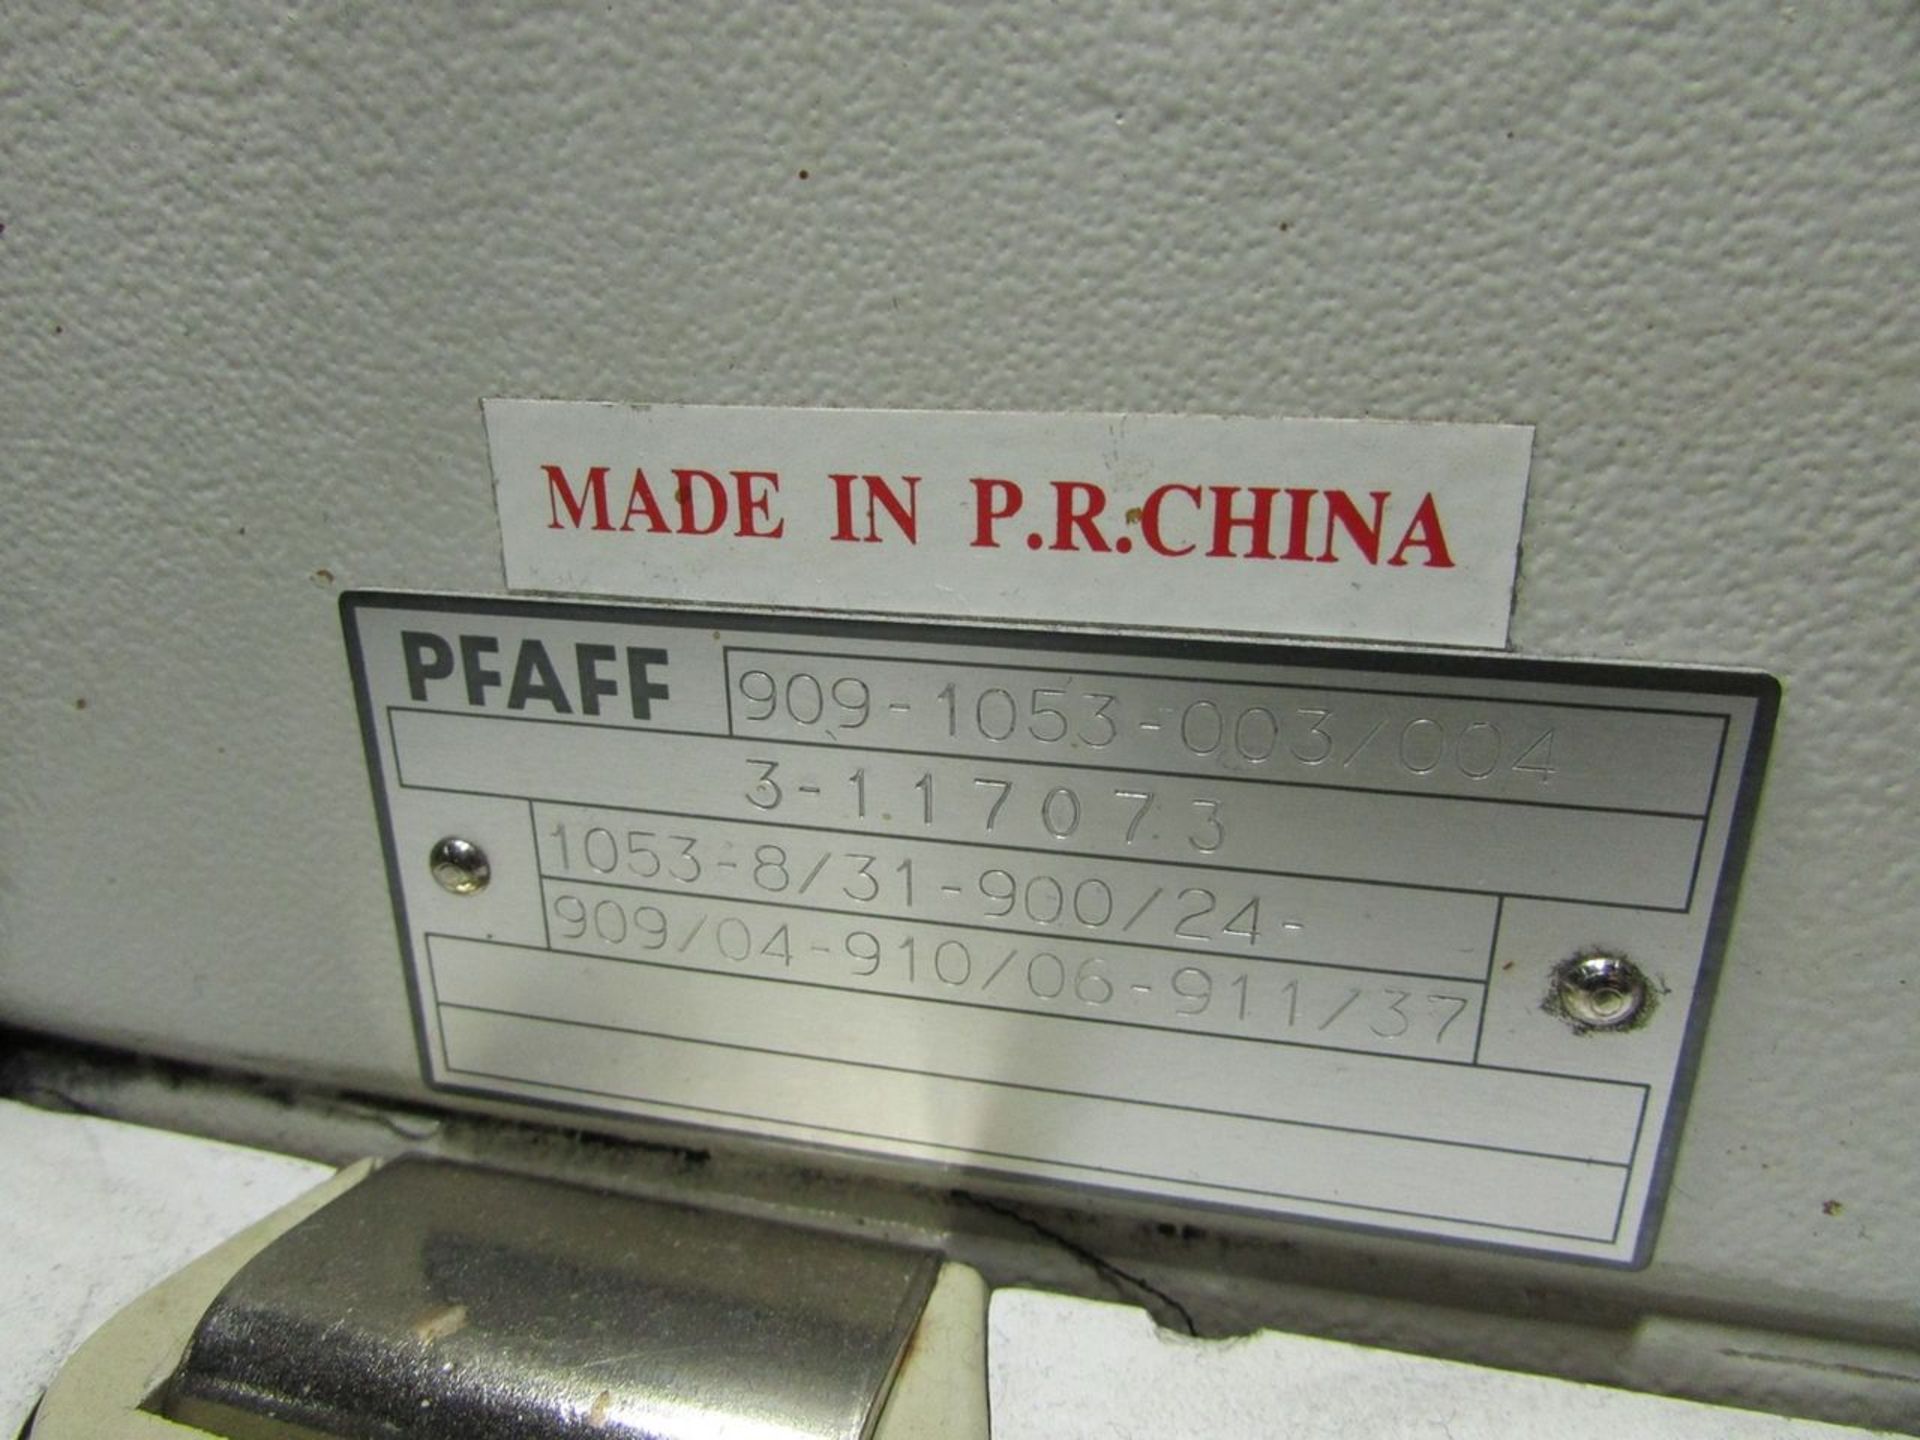 Pfaff Model 1053-8/31-900/24 Single Needle Lockstitch Sewing Machine, Back Tack, Efka AB620A - Image 10 of 10